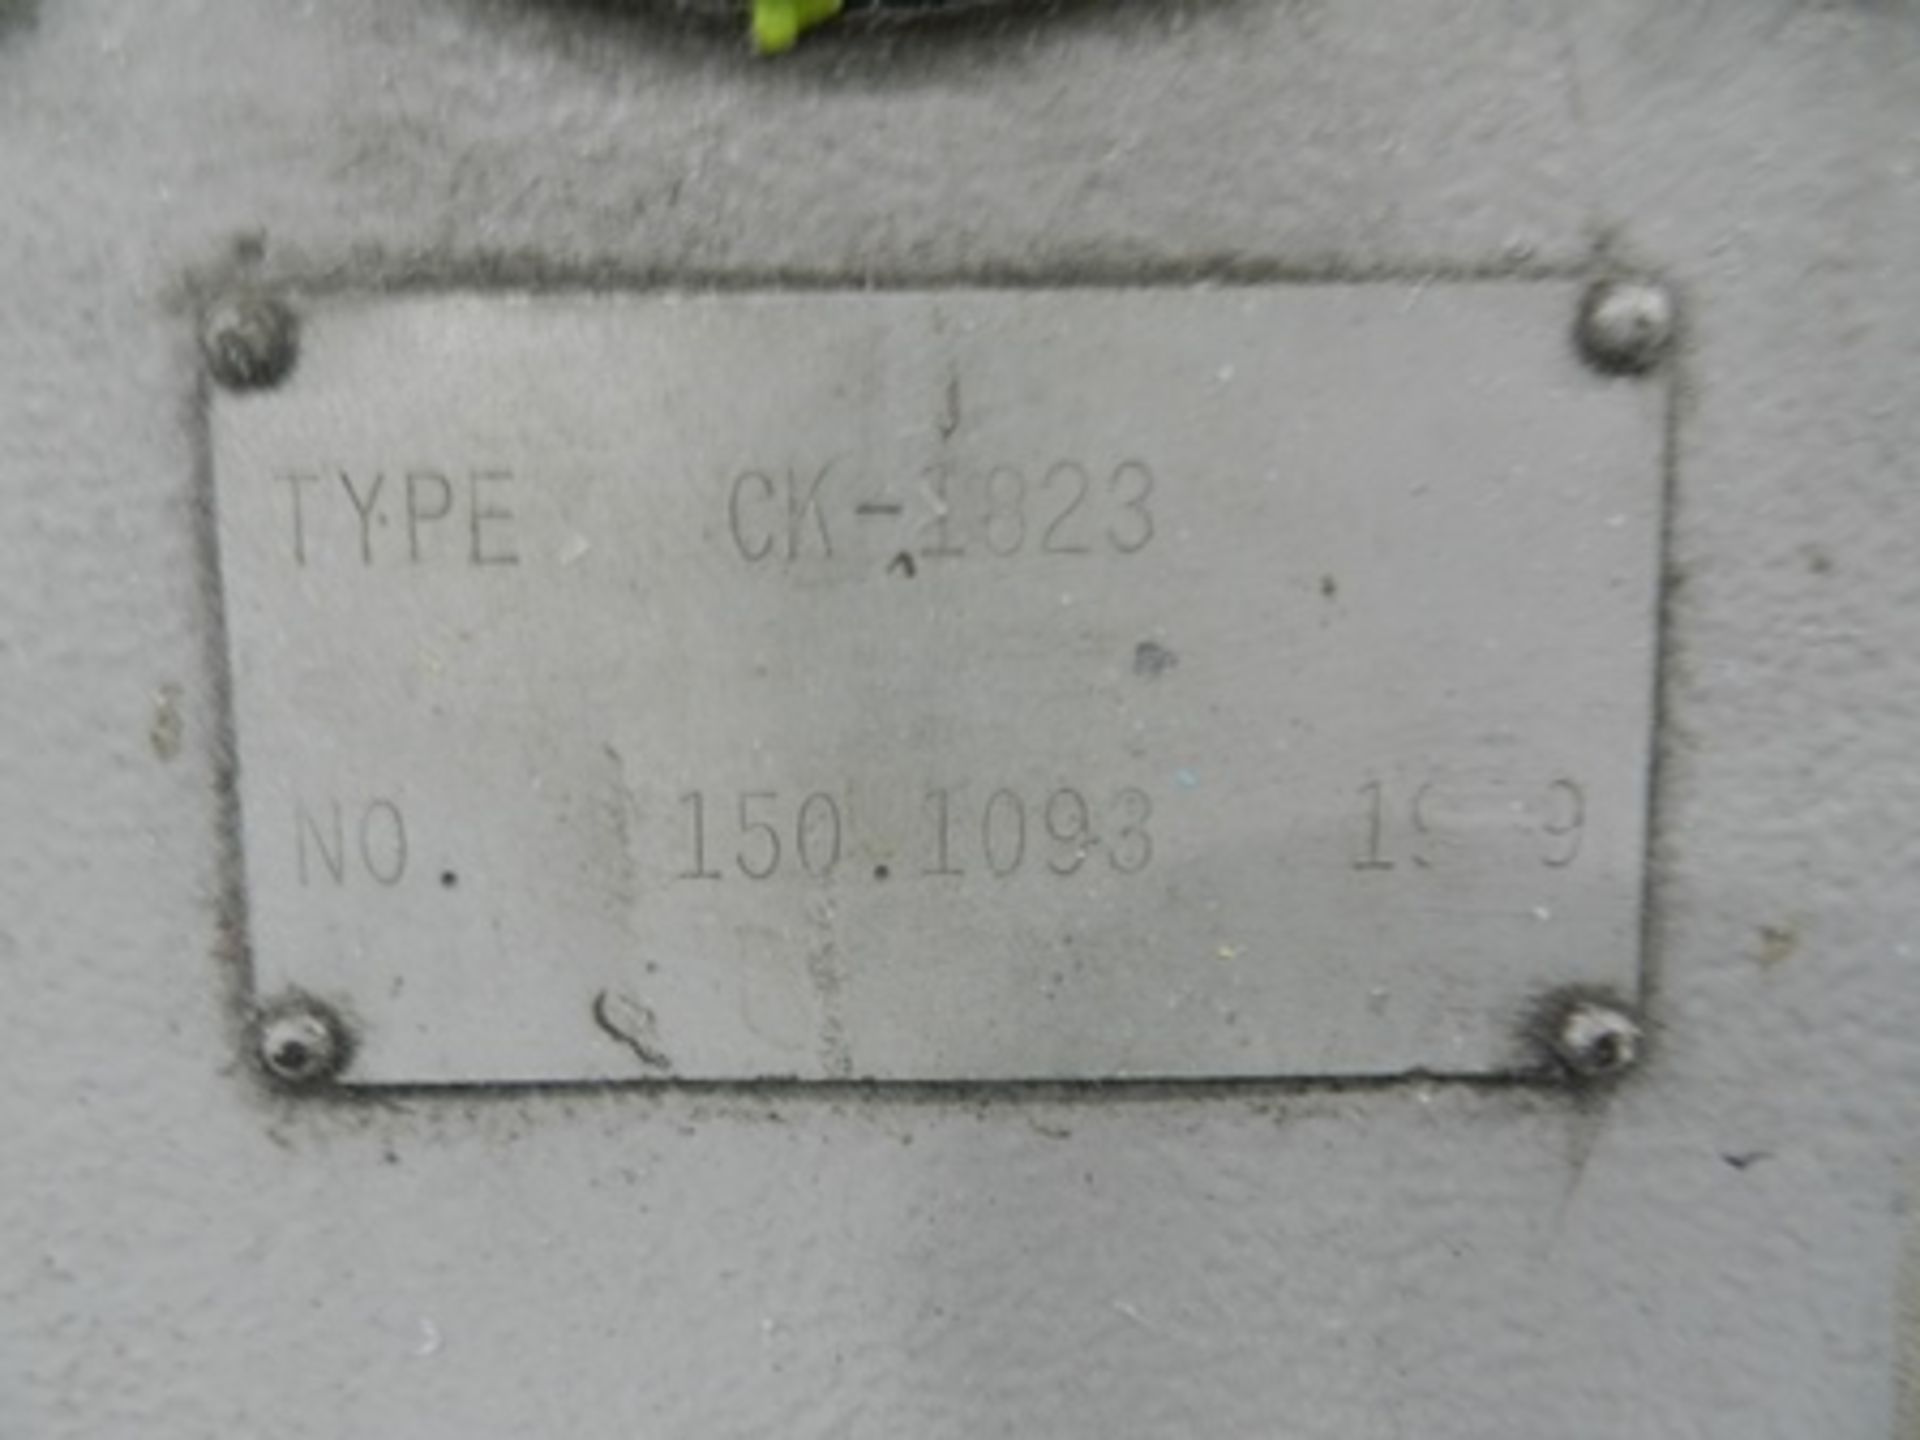 CONAIR GRANULATOR MODEL CK1823 SERIE 150.1093, 440V. ENGINE, YEAR 1999. - Image 8 of 9